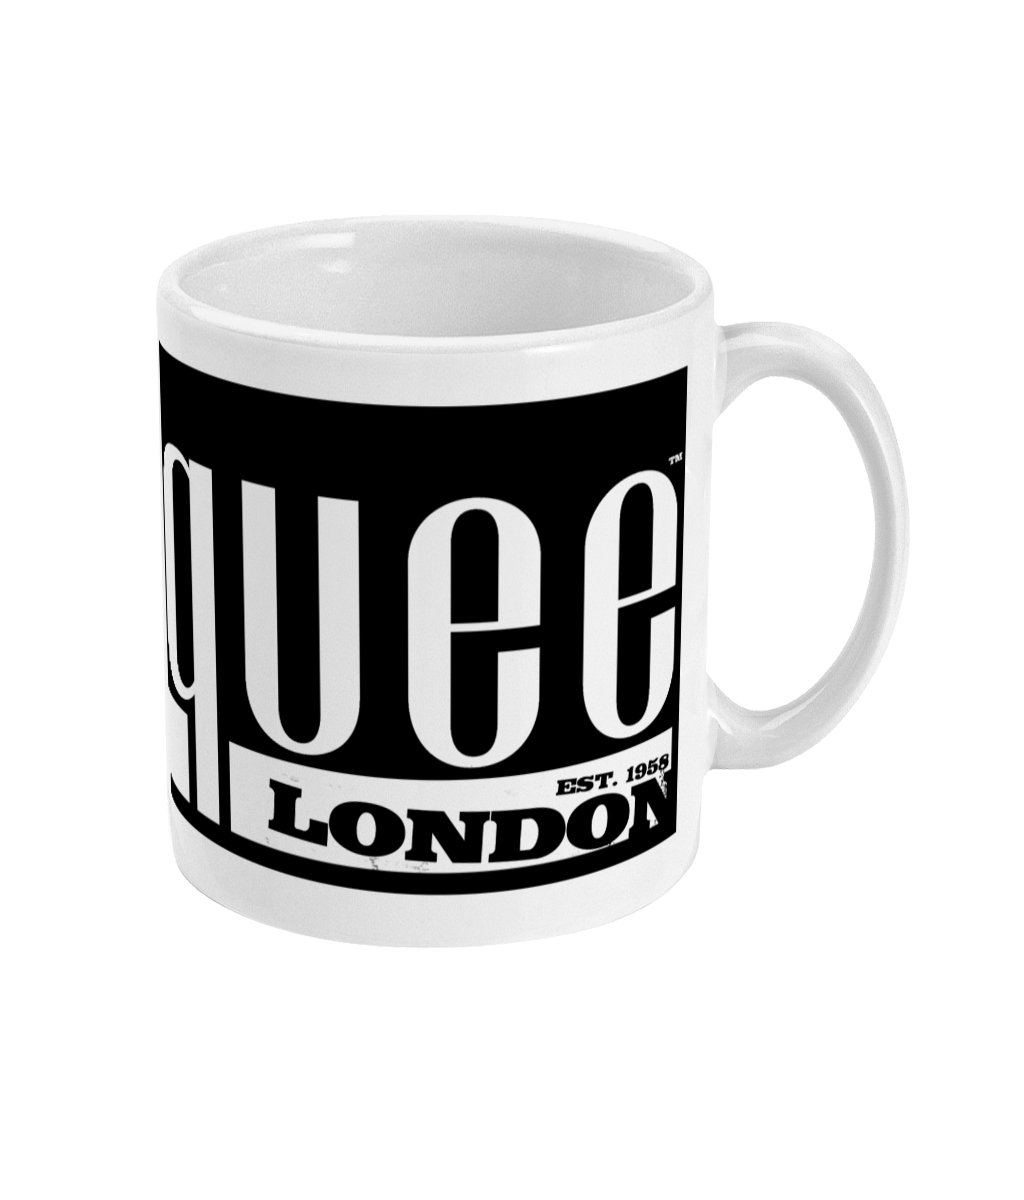 Marquee London Mug Black